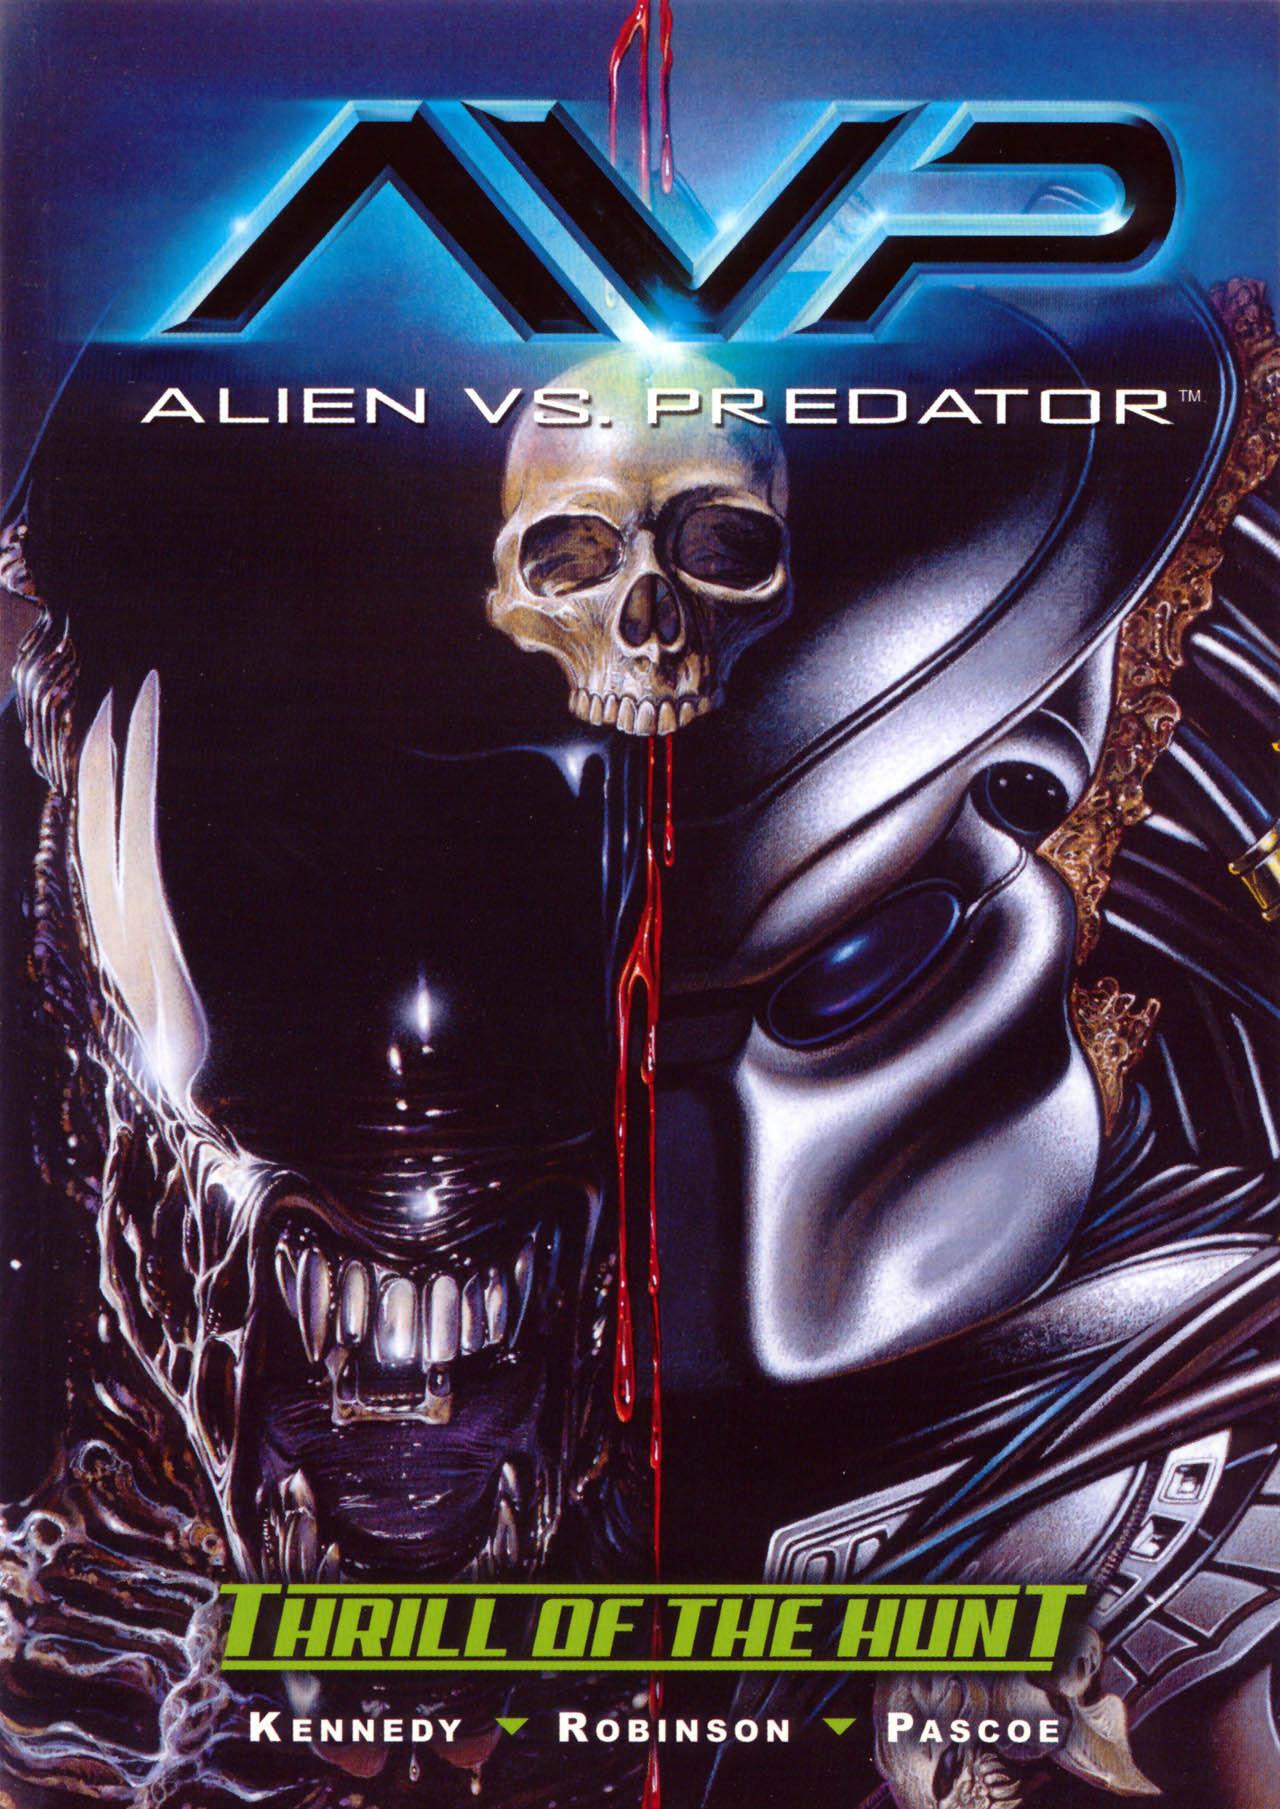 Aliens vs. Predators: Thrill of the Hunt Vol. 1 #1